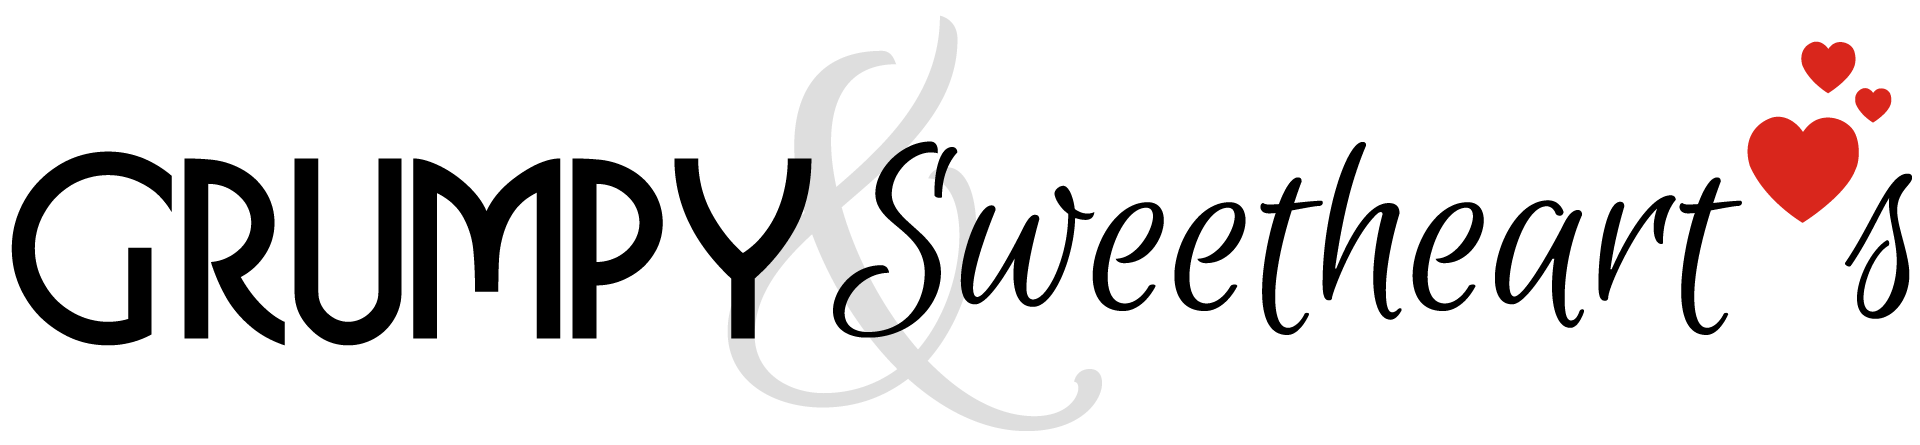 Sweathearts Logo - Grumpy & Sweethearts Logo 2 1920px